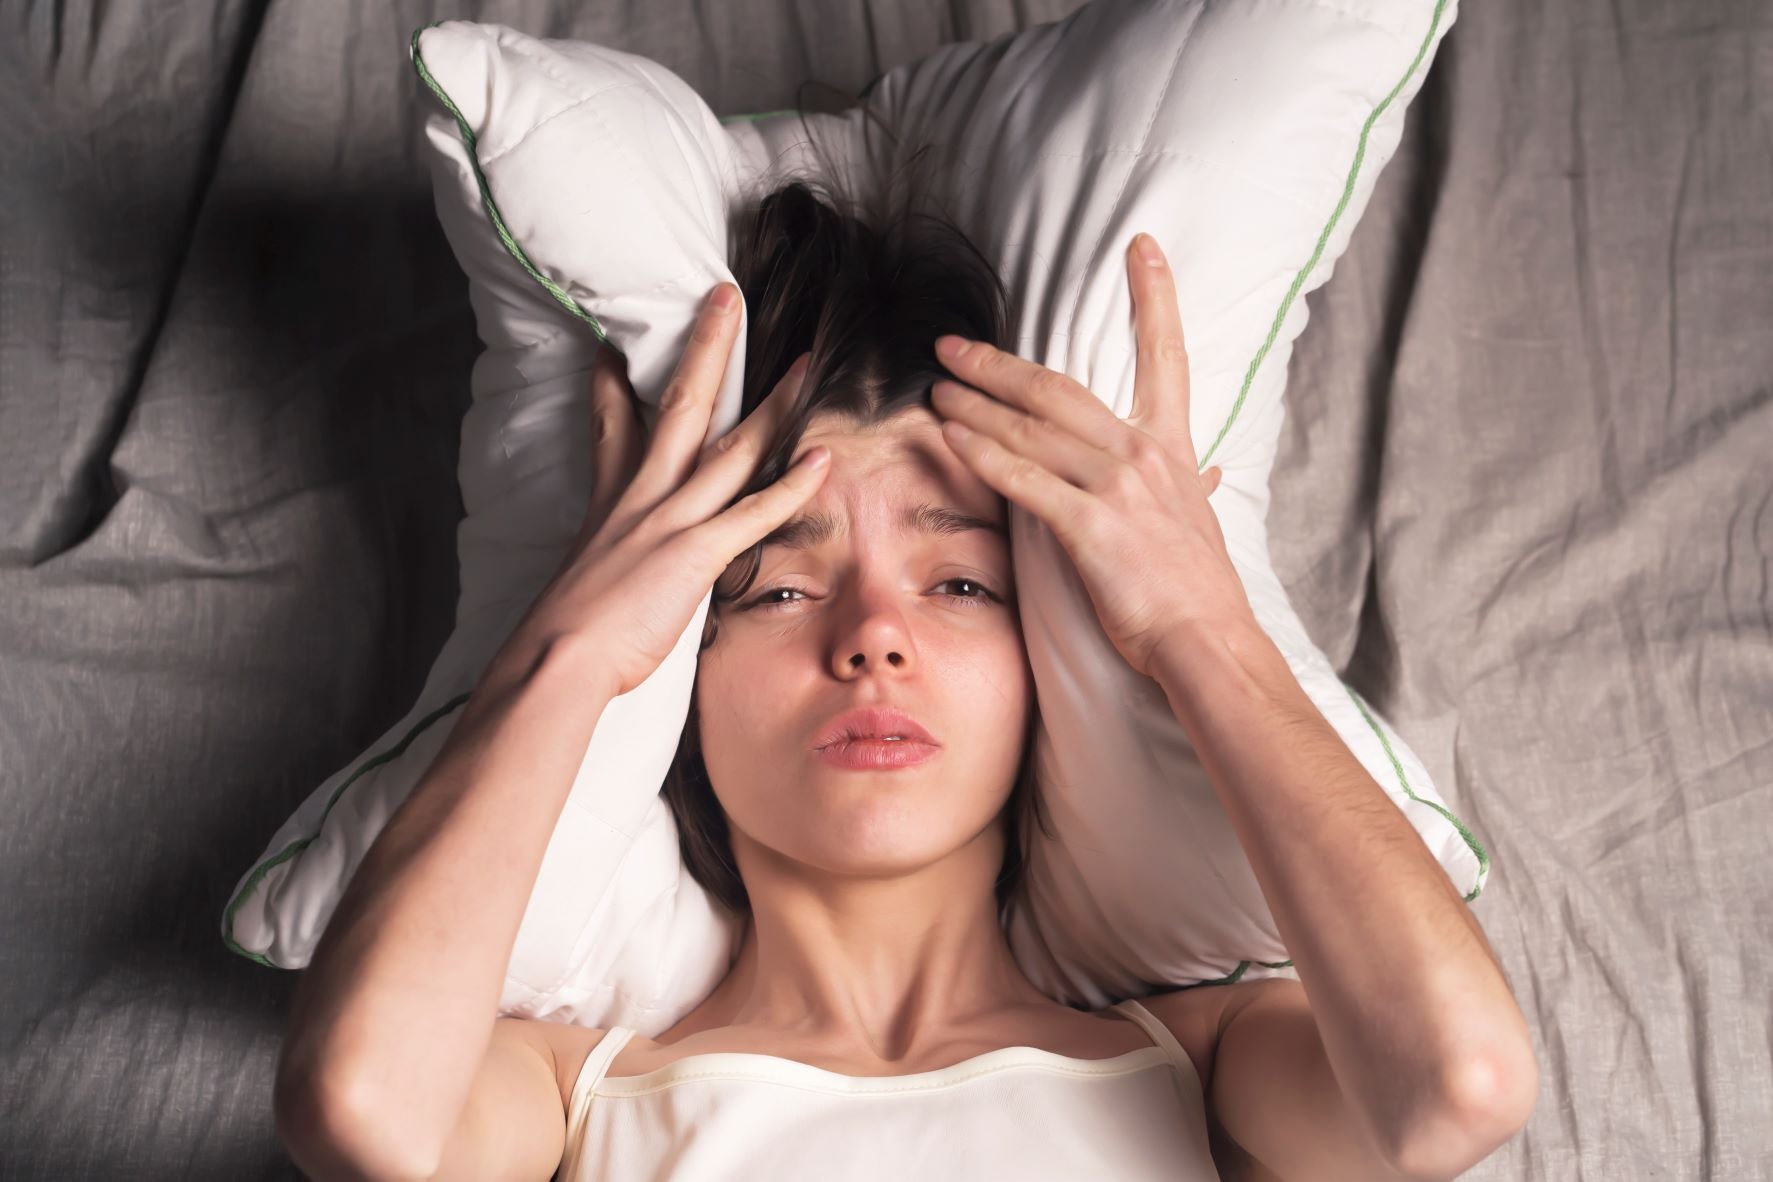 Nightmares when lucid dreaming, woman awake after having nightmare needs 